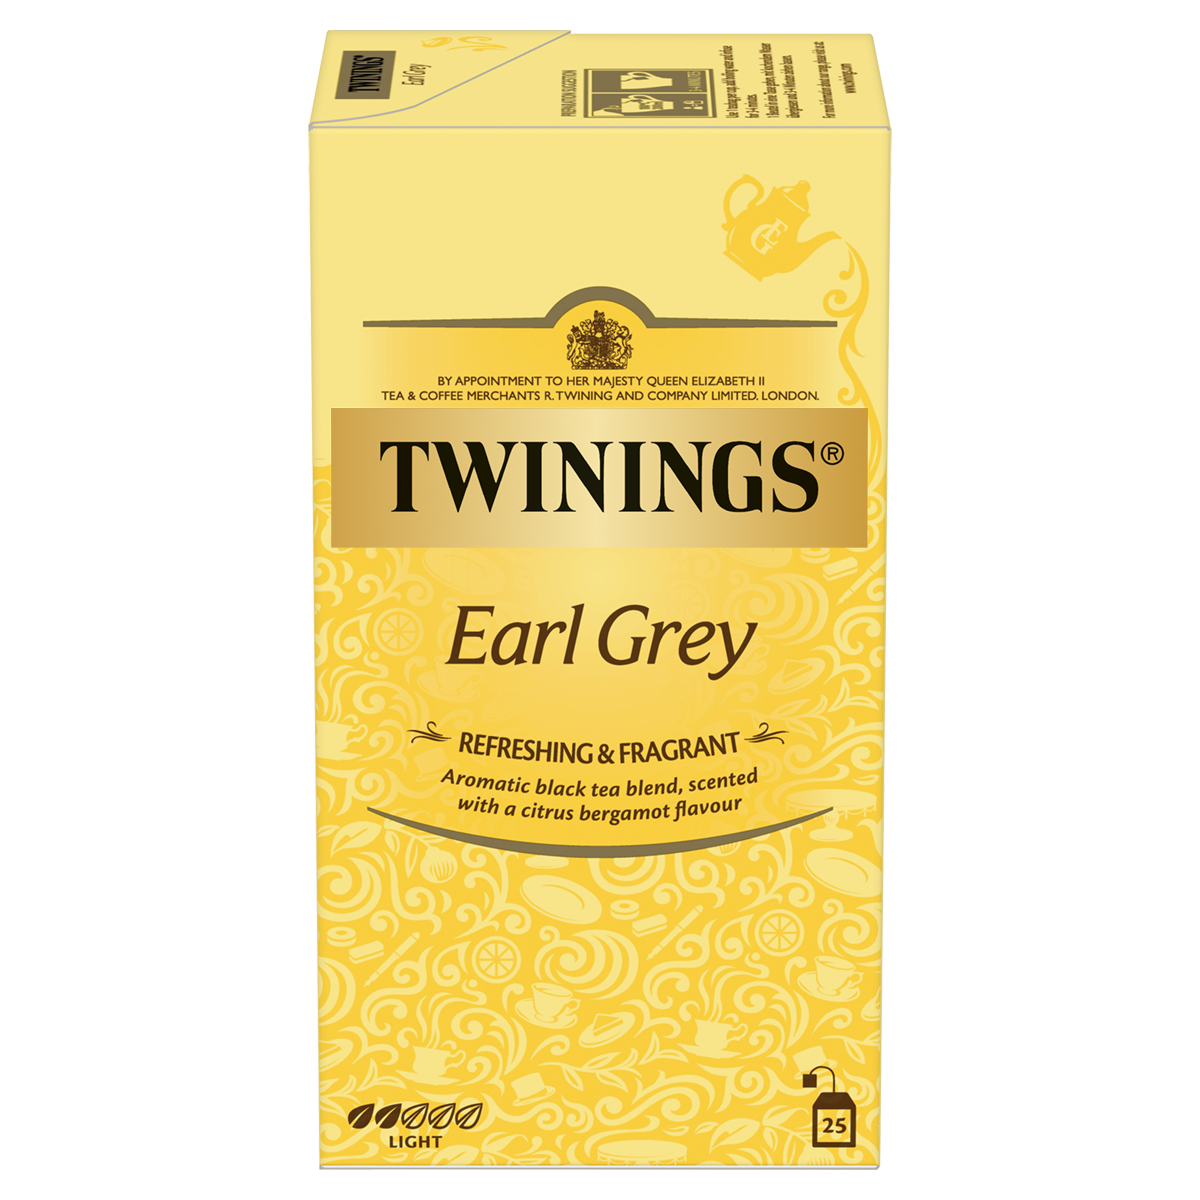  Twinings Earl Grey: le thé noir rafraîchissant